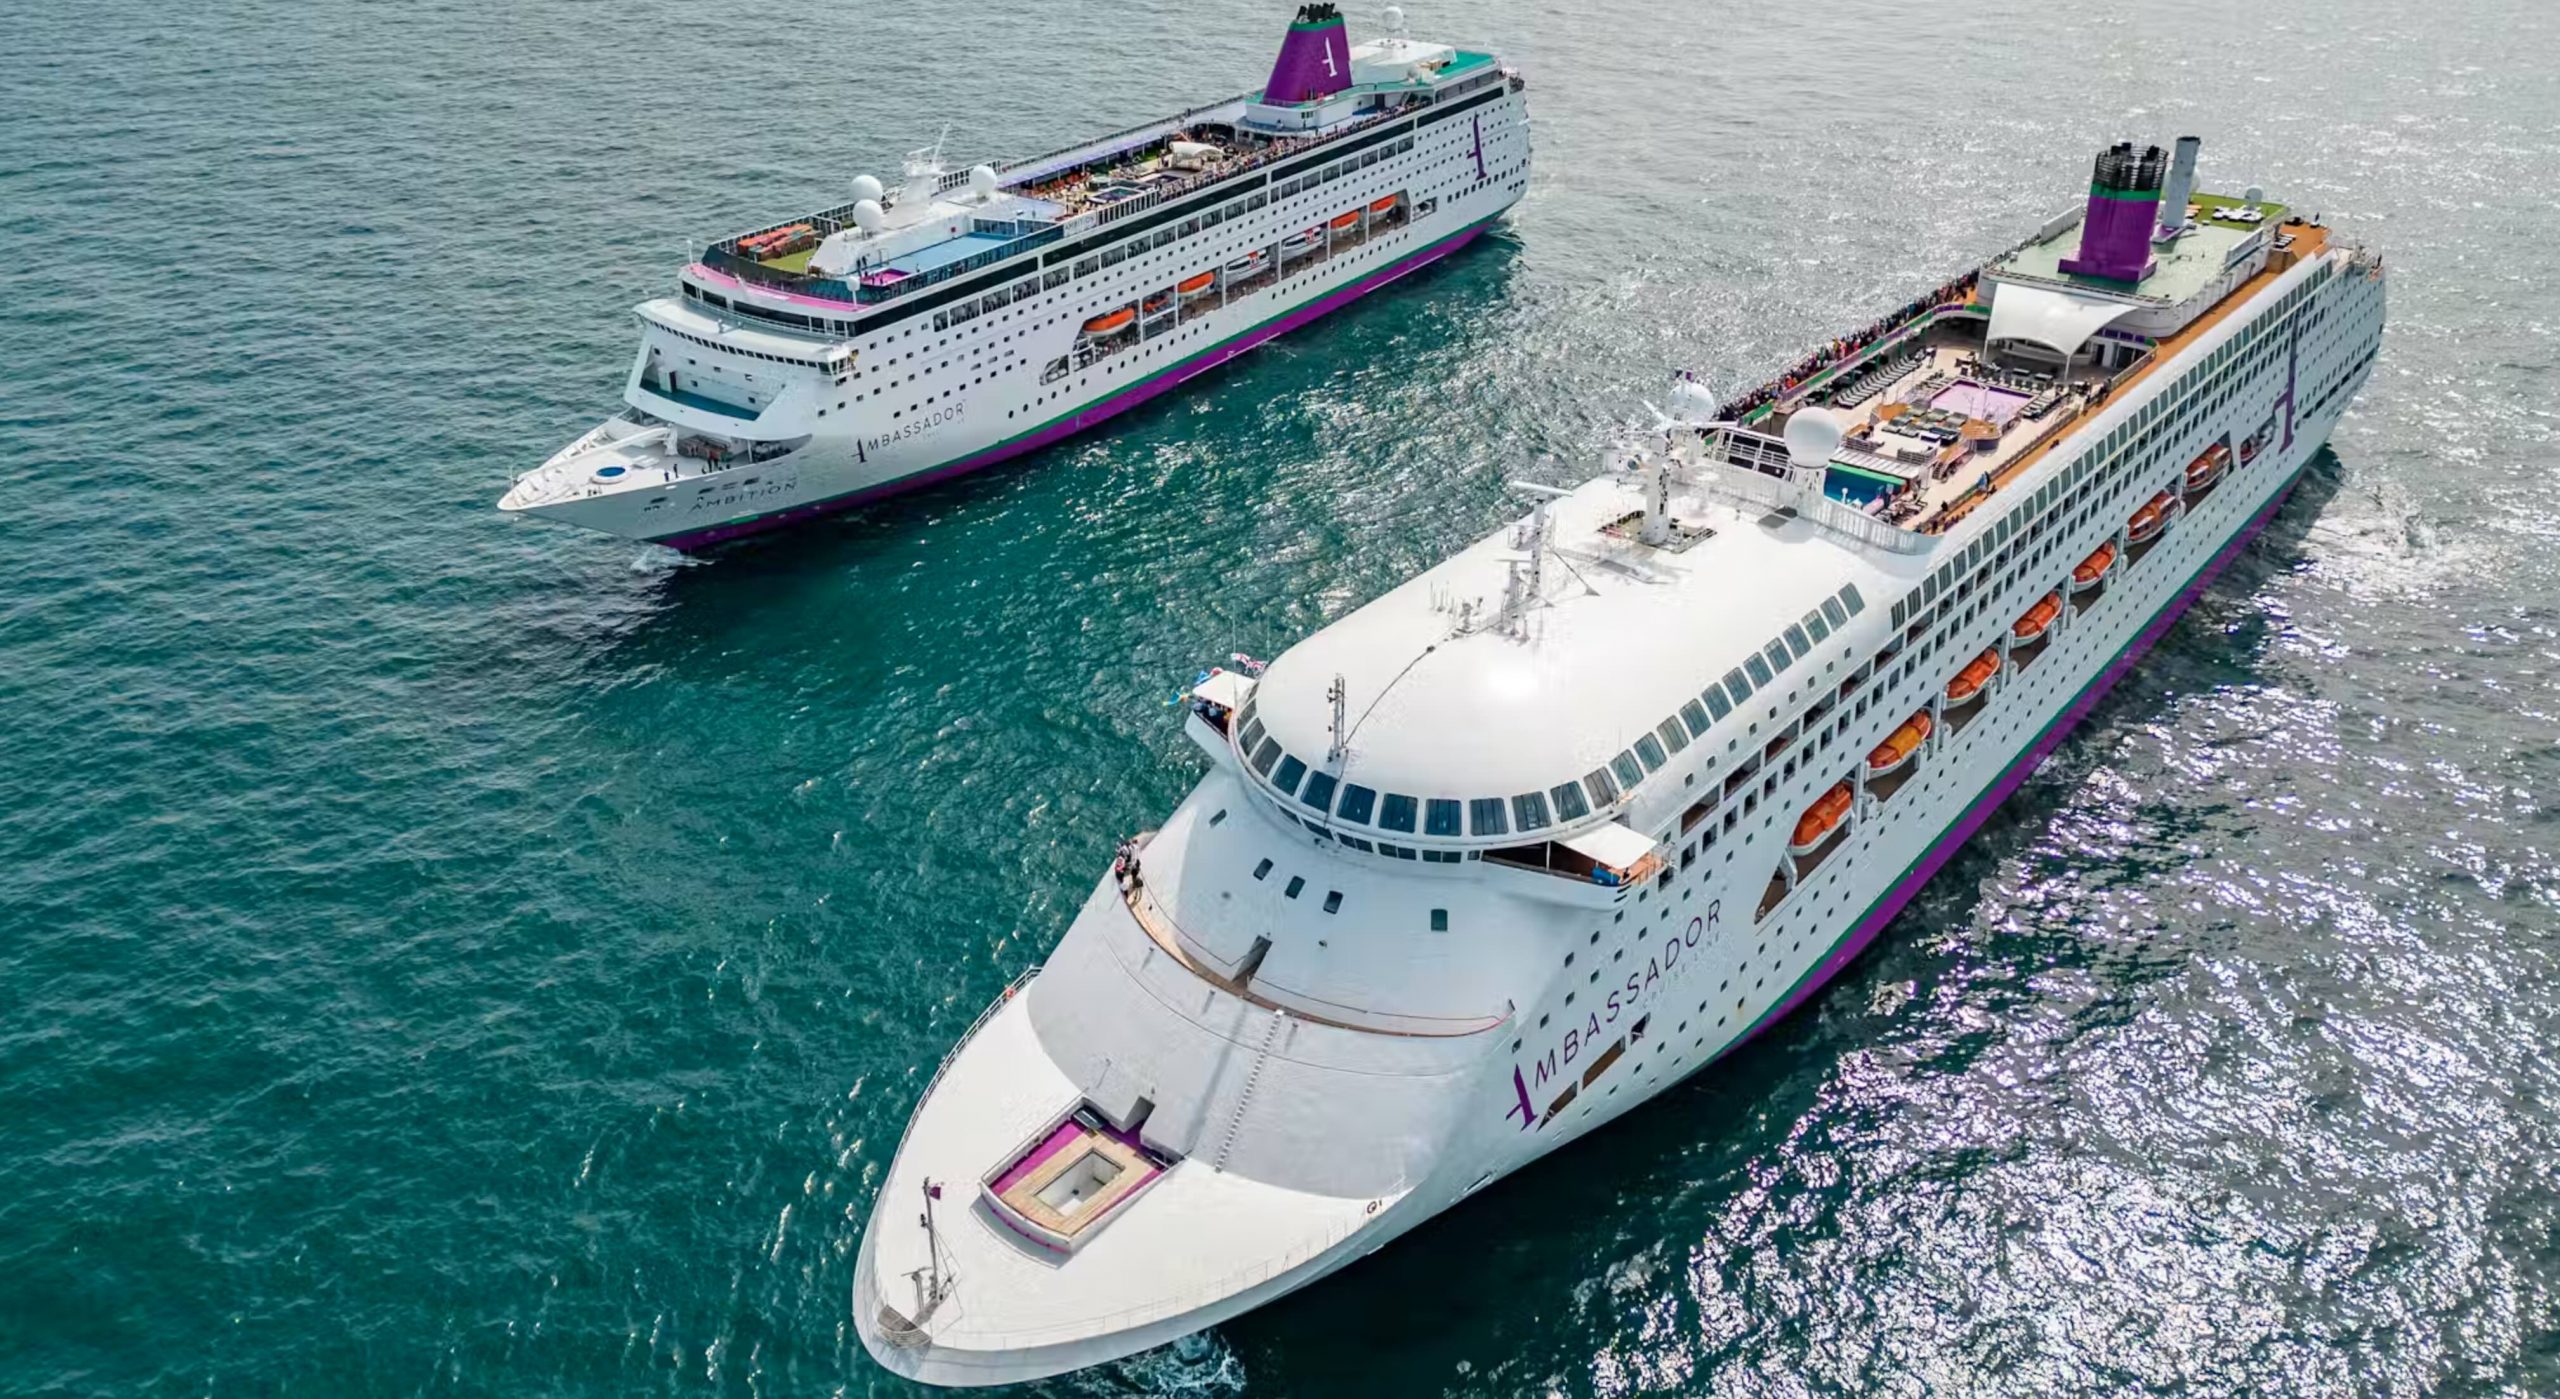 Two Ambassador cruise ships